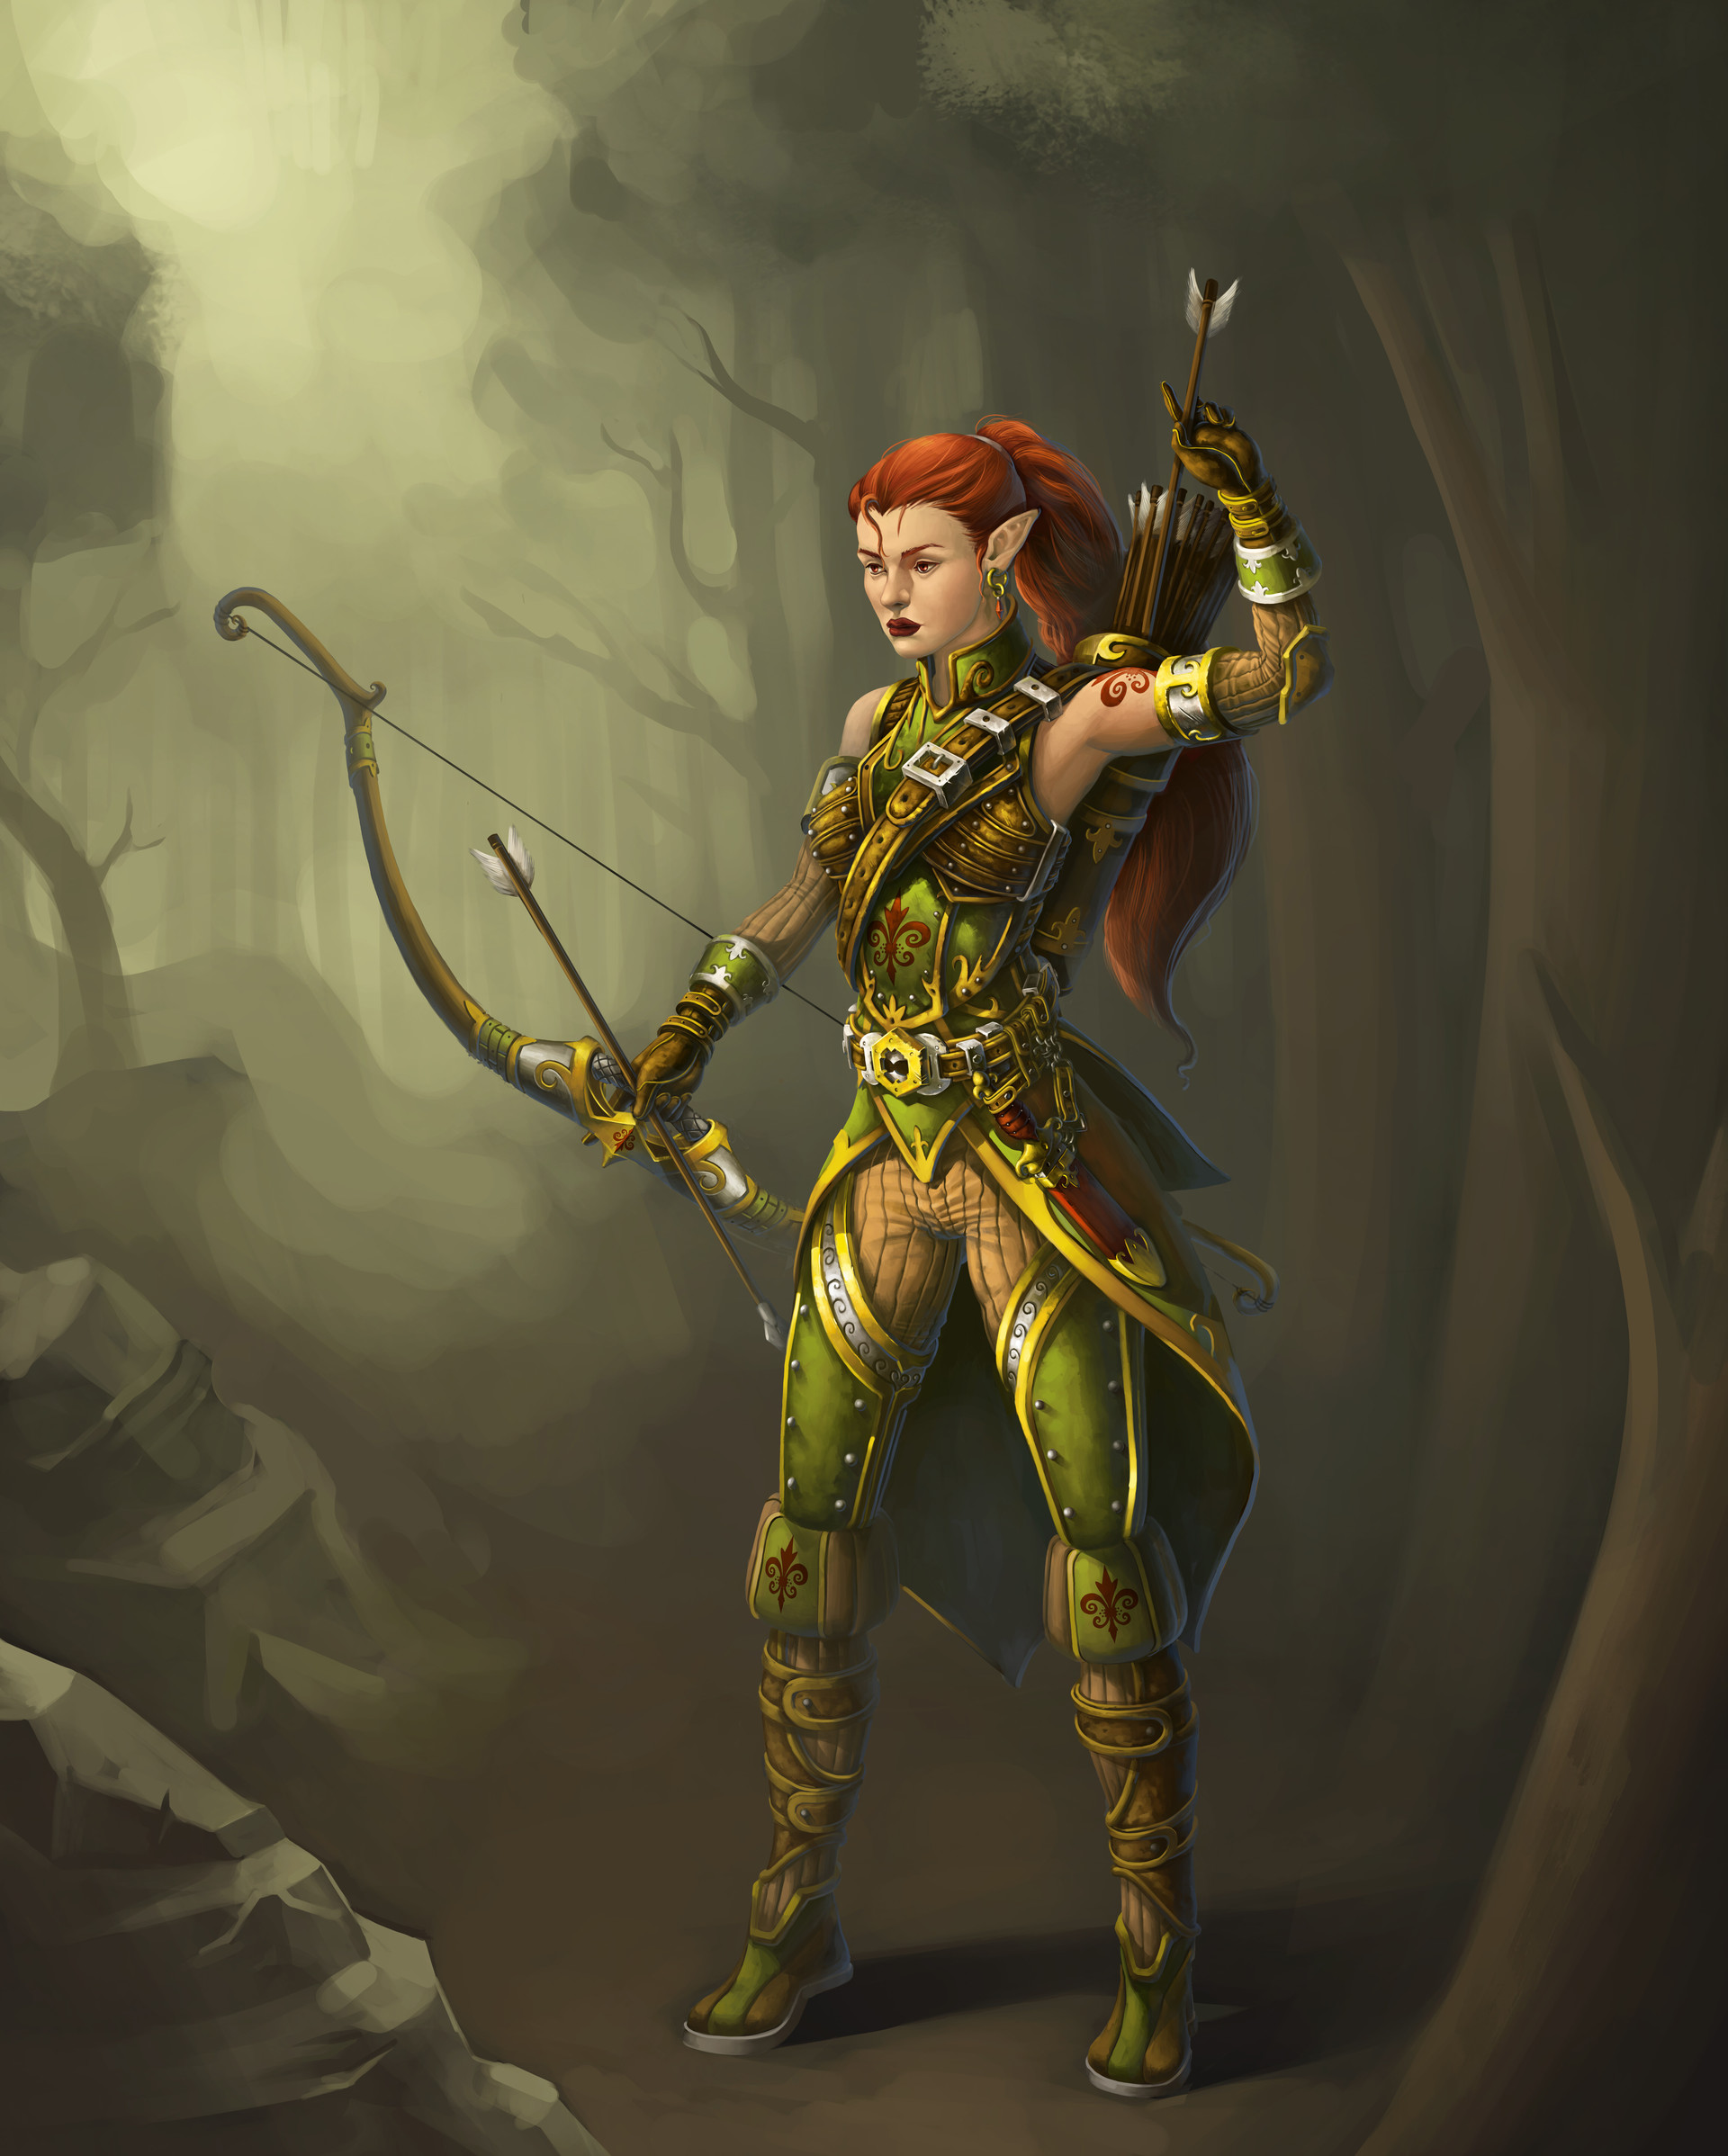 ArtStation - elf archer